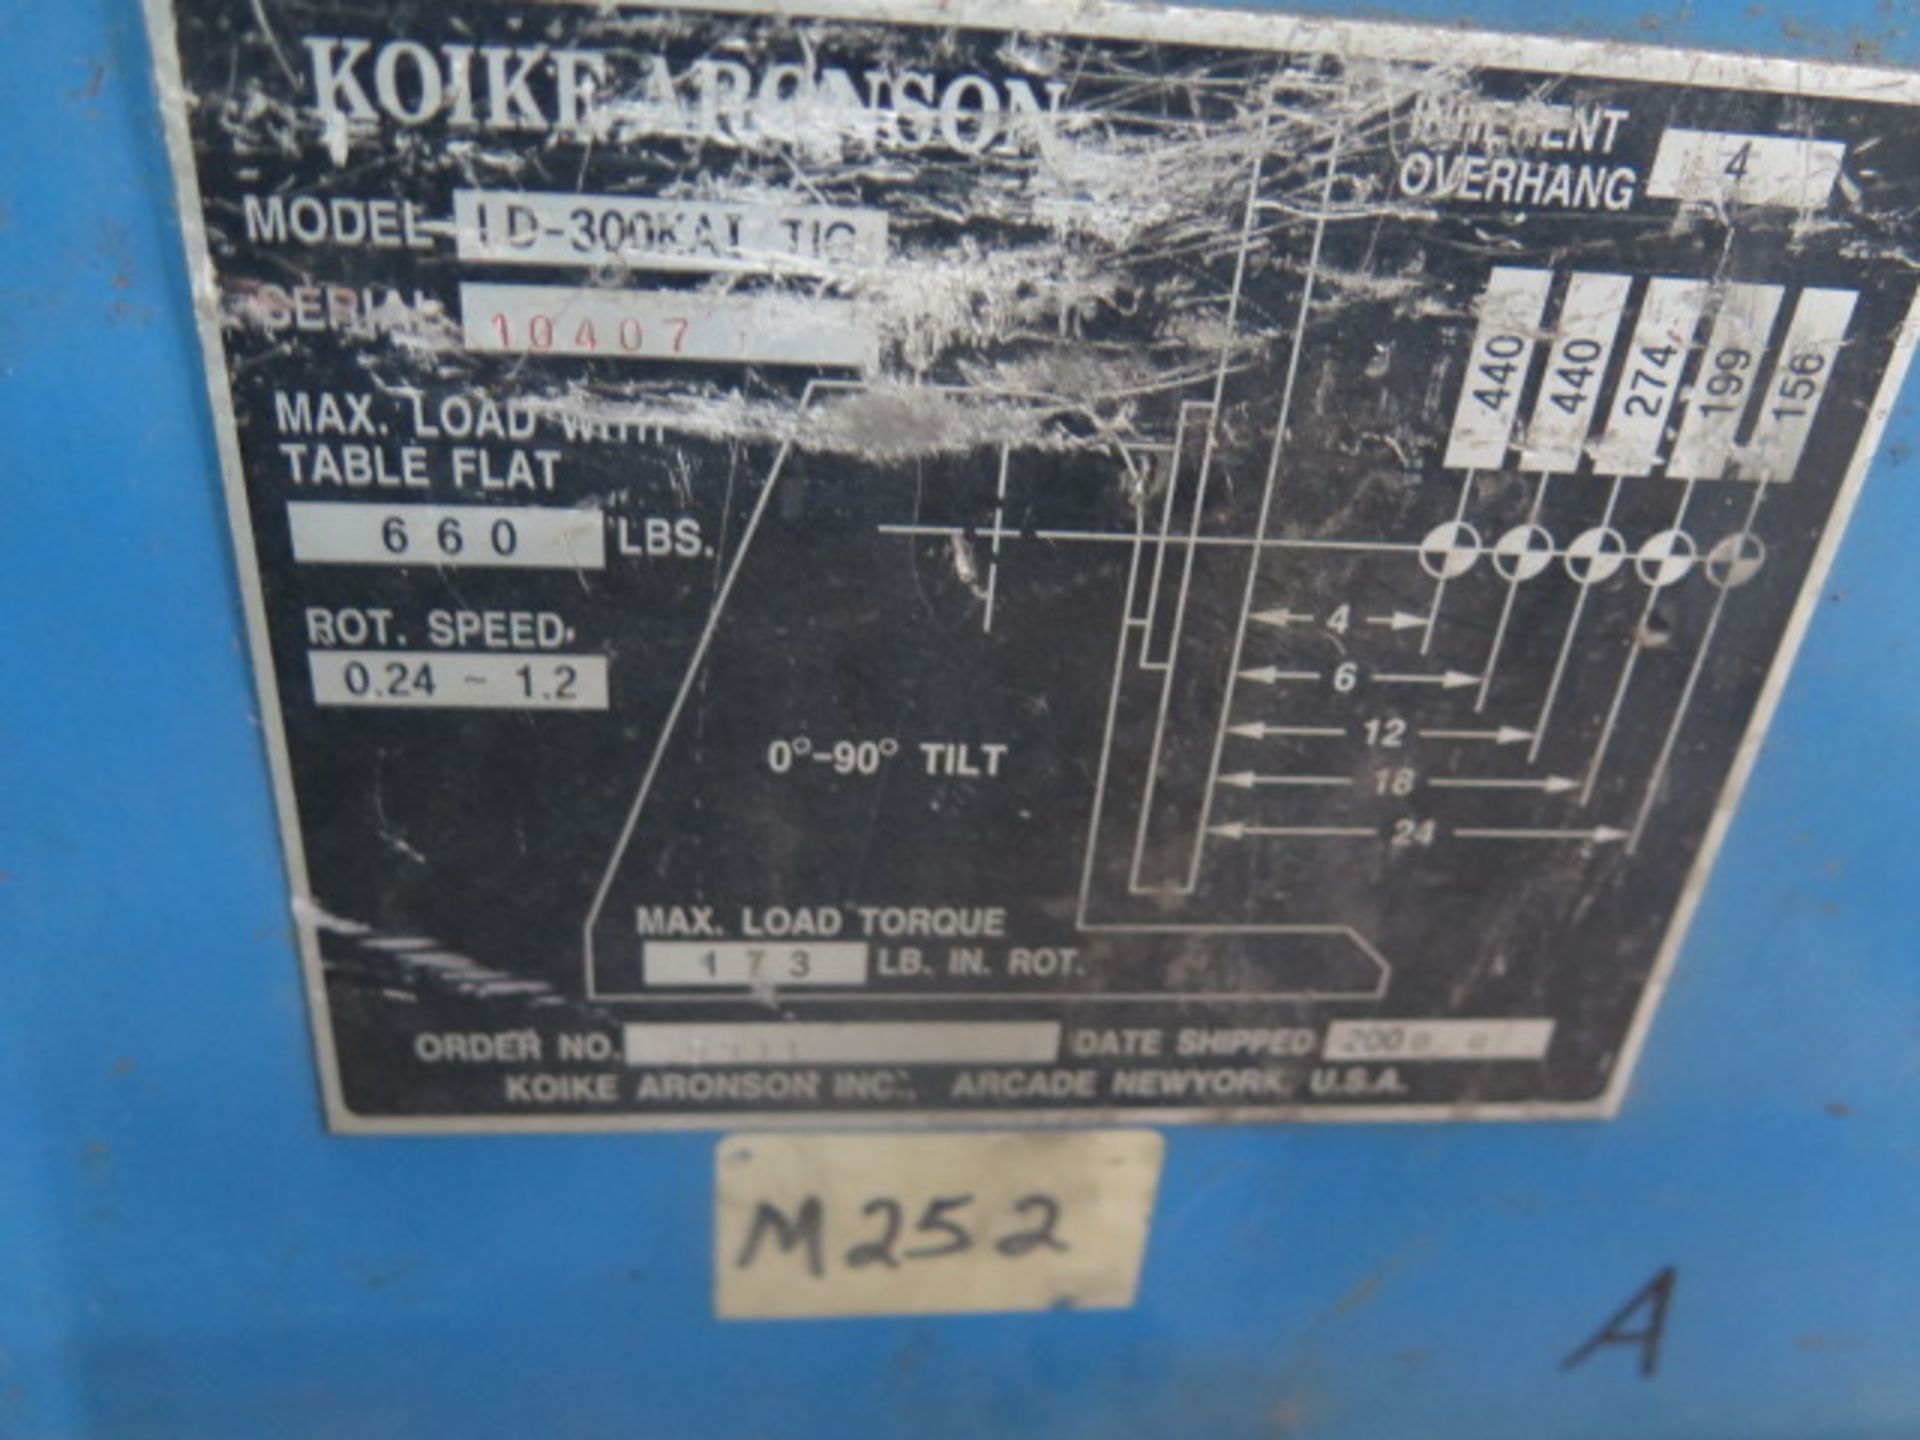 Koike Aronson ID-300 KIA/TIC 18” Welding Positioner s/n 10407 (SOLD AS-IS - NO WARRANTY) - Image 7 of 7